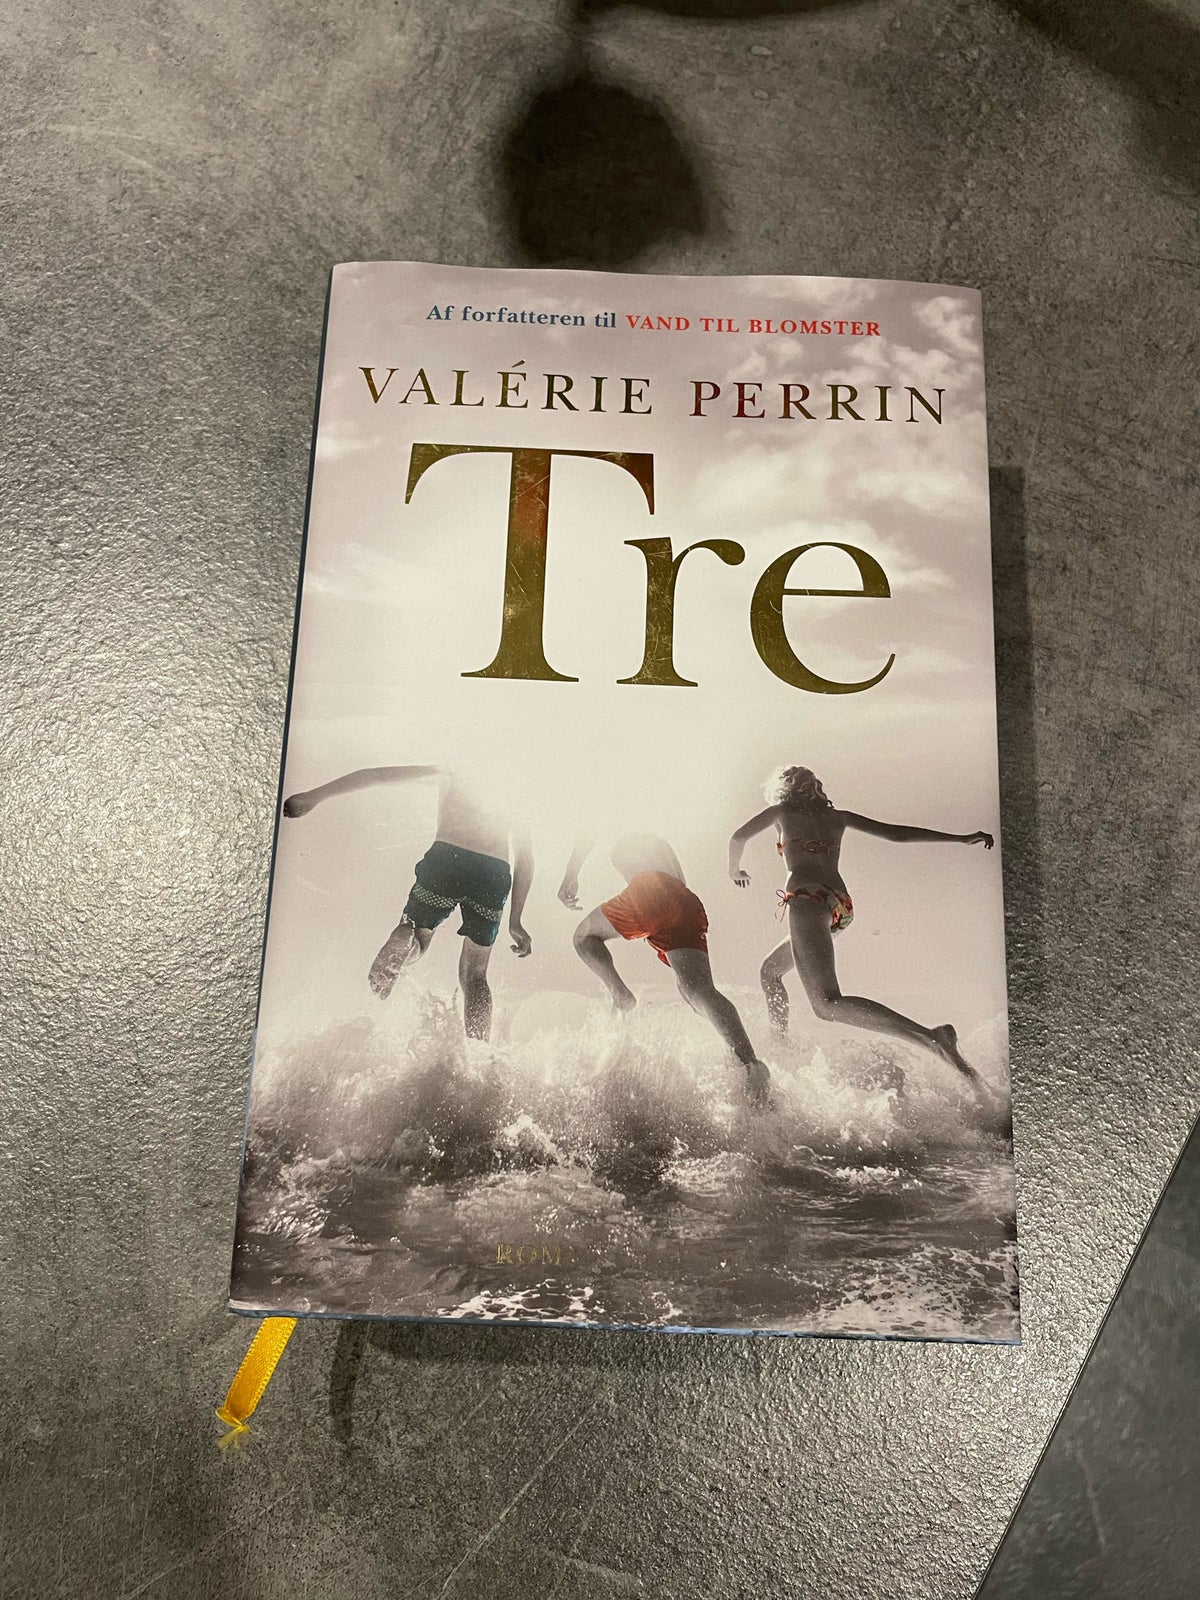 Tre - Valérie Perrin